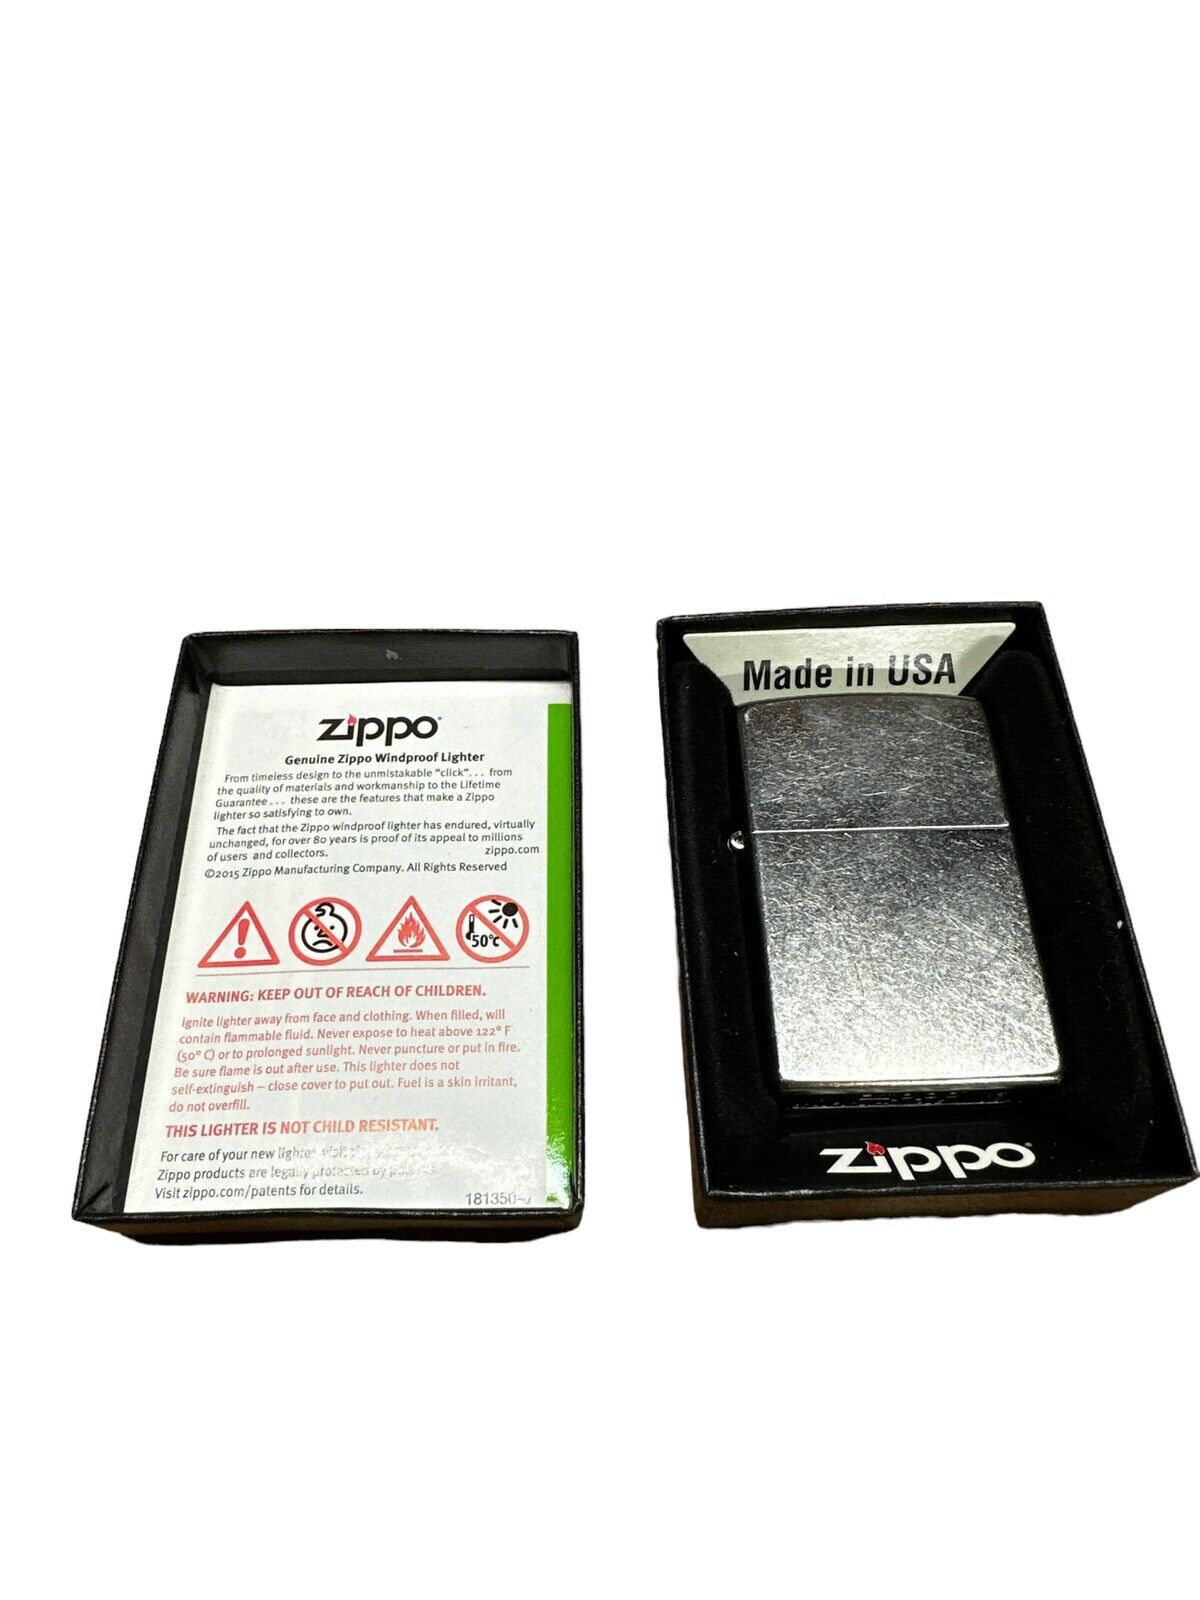 NEW UNUSED Zippo Lighter 16 - USA Made - With Original Box